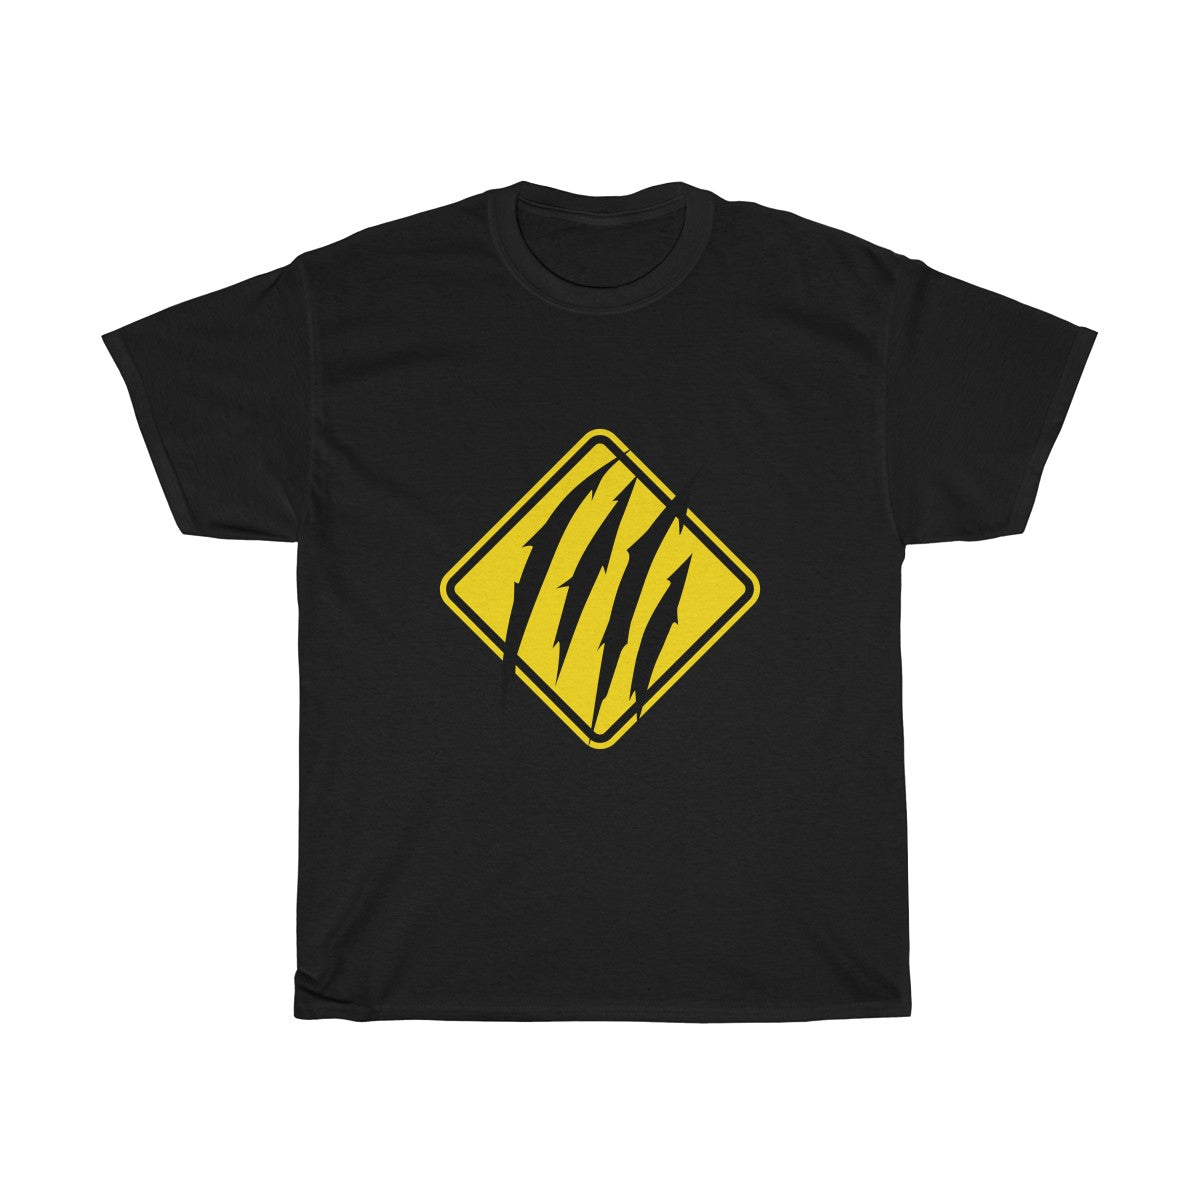 Scratch Warning - T-Shirt T-Shirt Wexon Black S 